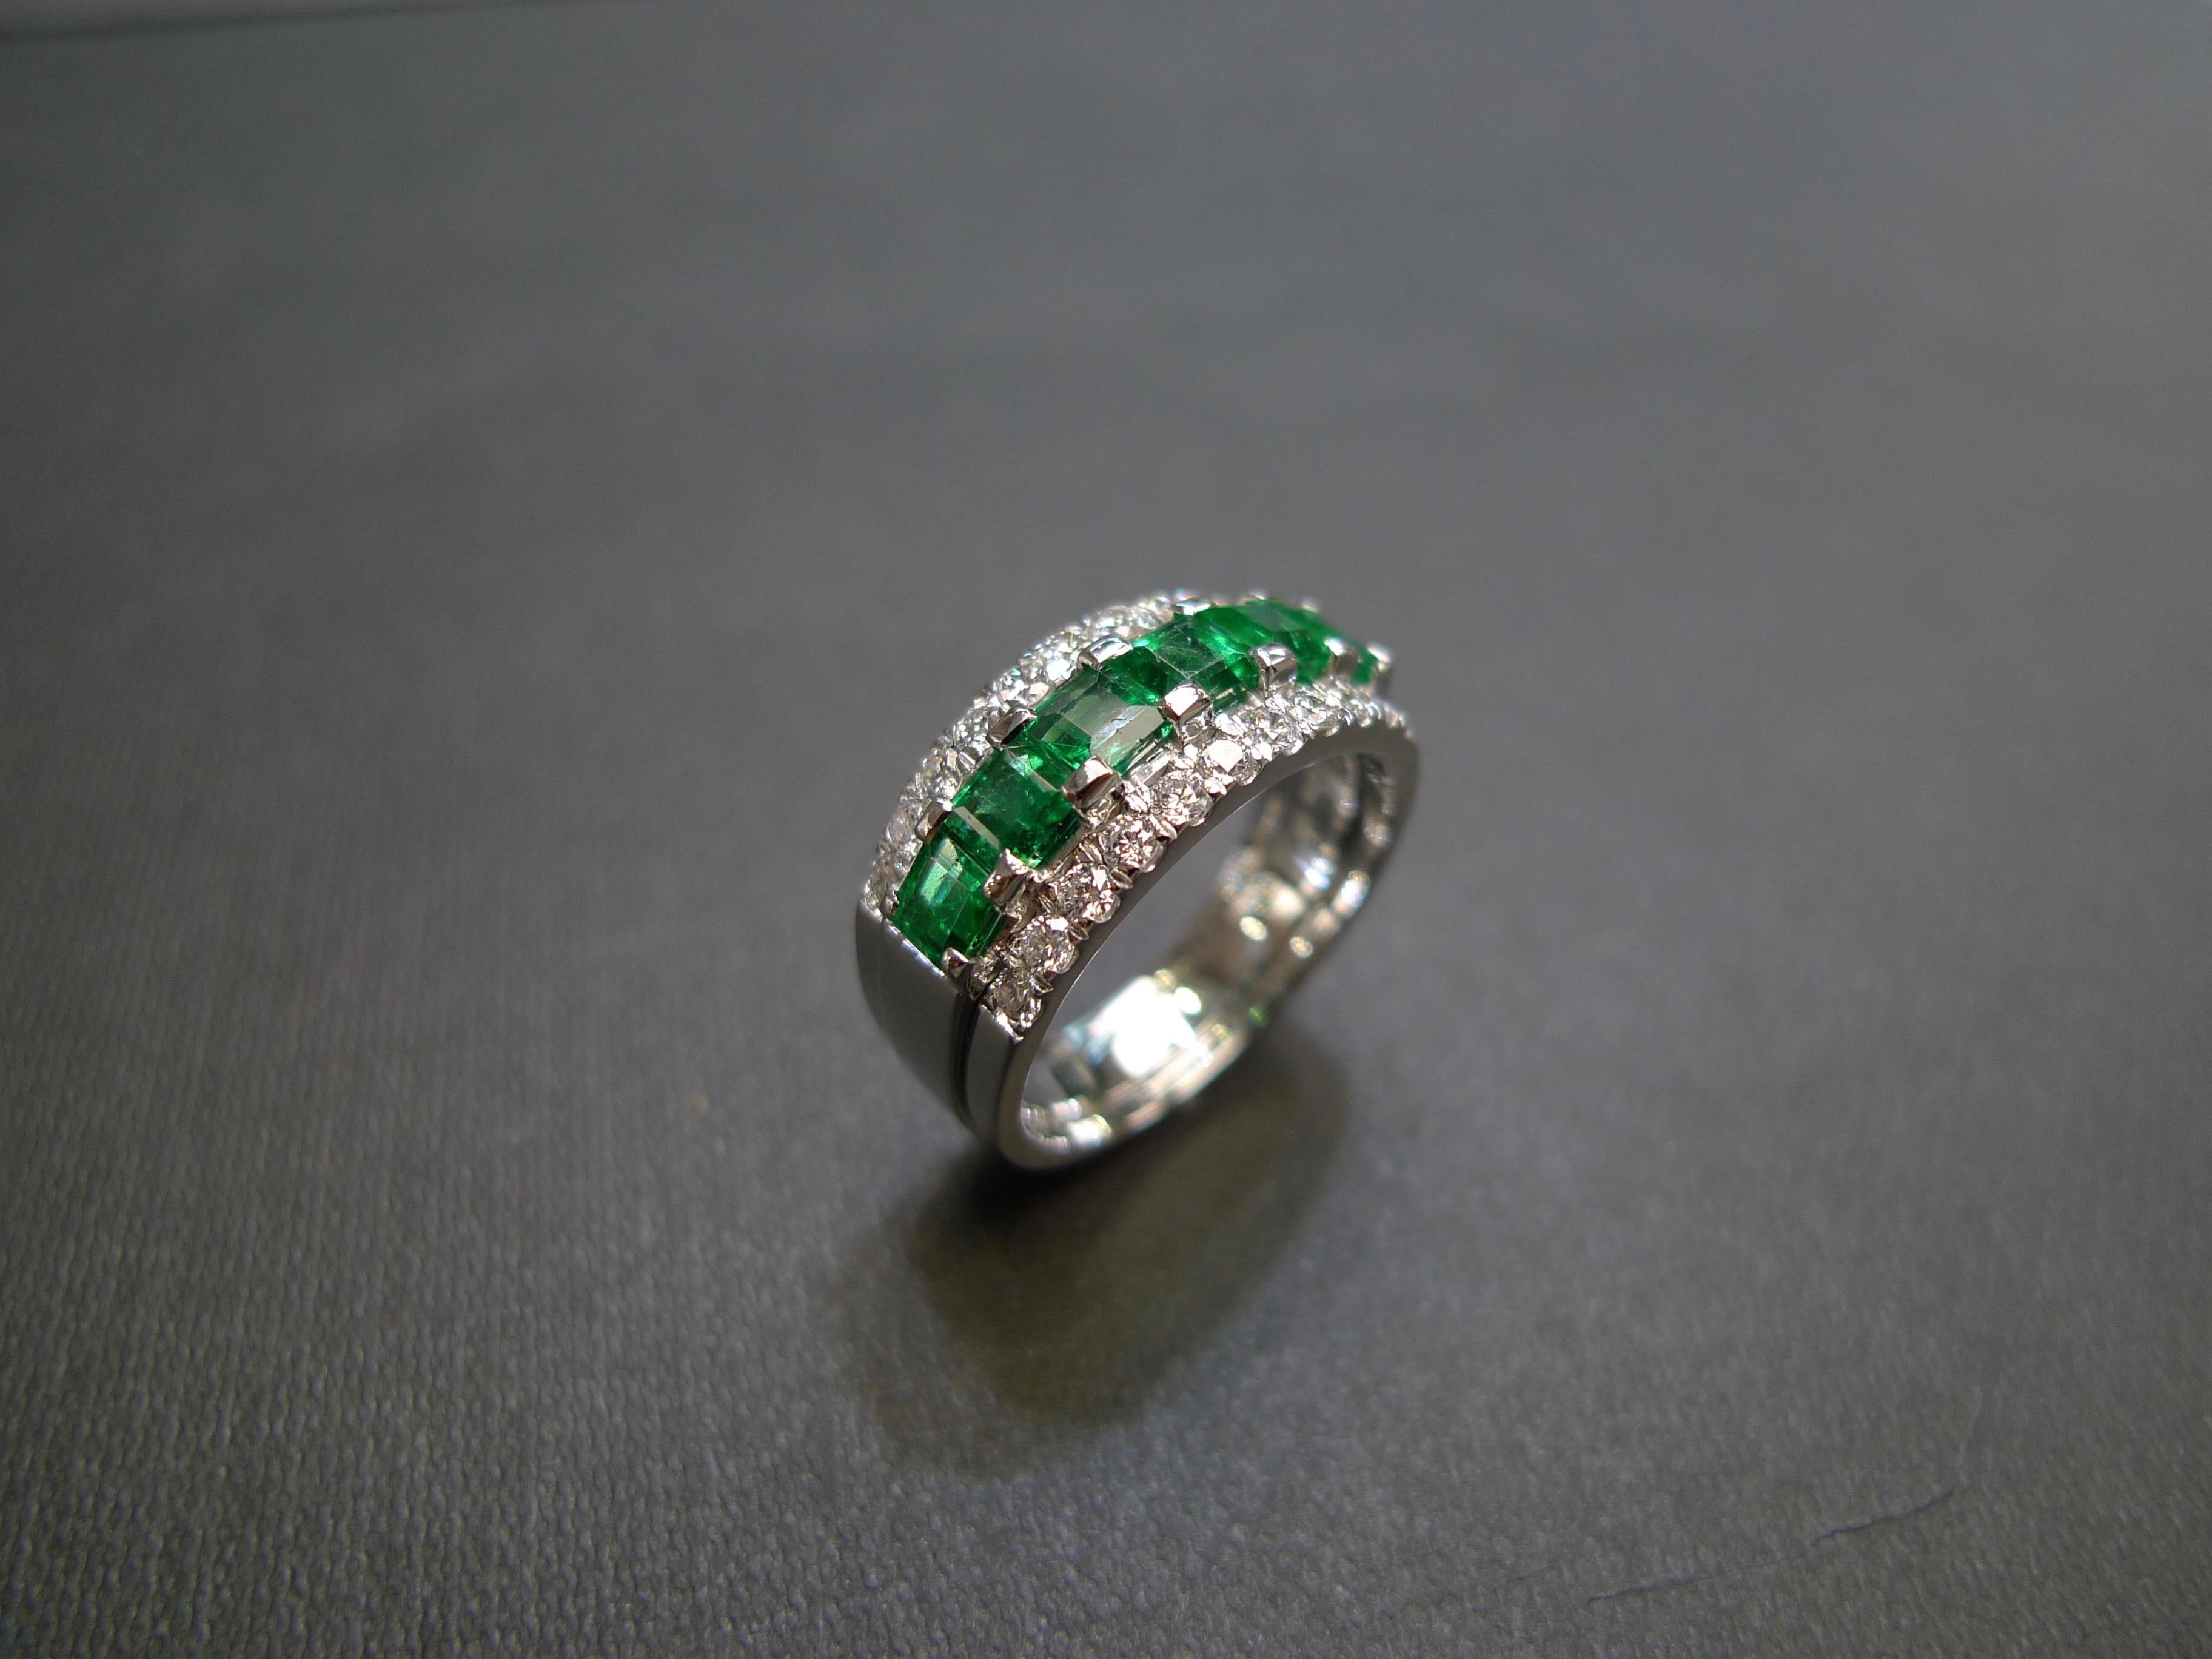 For Sale:  Three-Rows Square Cut Emerald and Round Brilliant Cut Diamond Wedding Ring 10